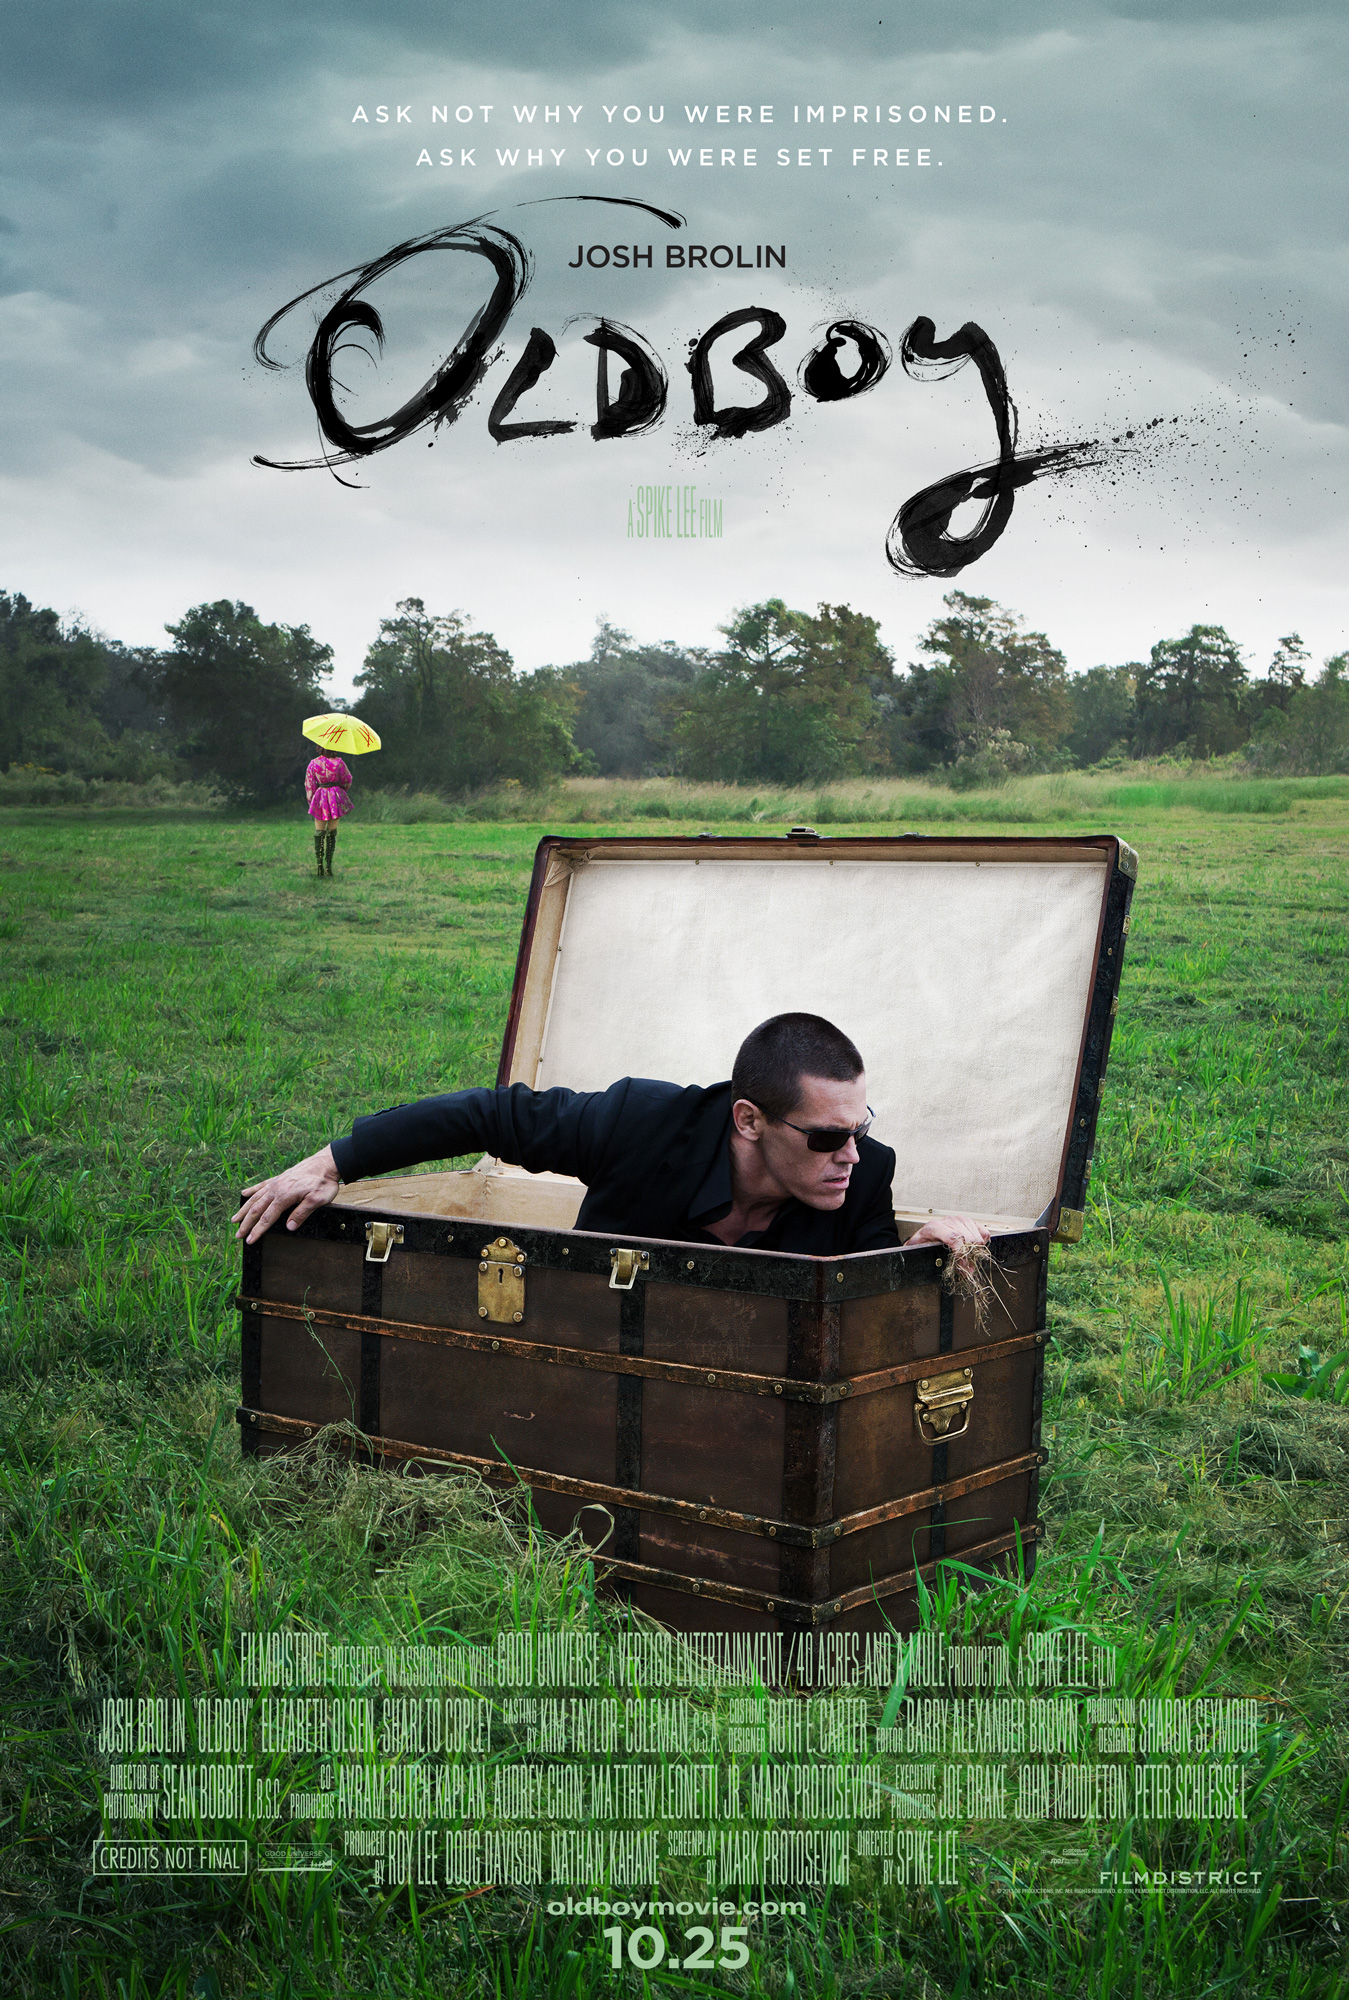 Oldboy 2013 Poster